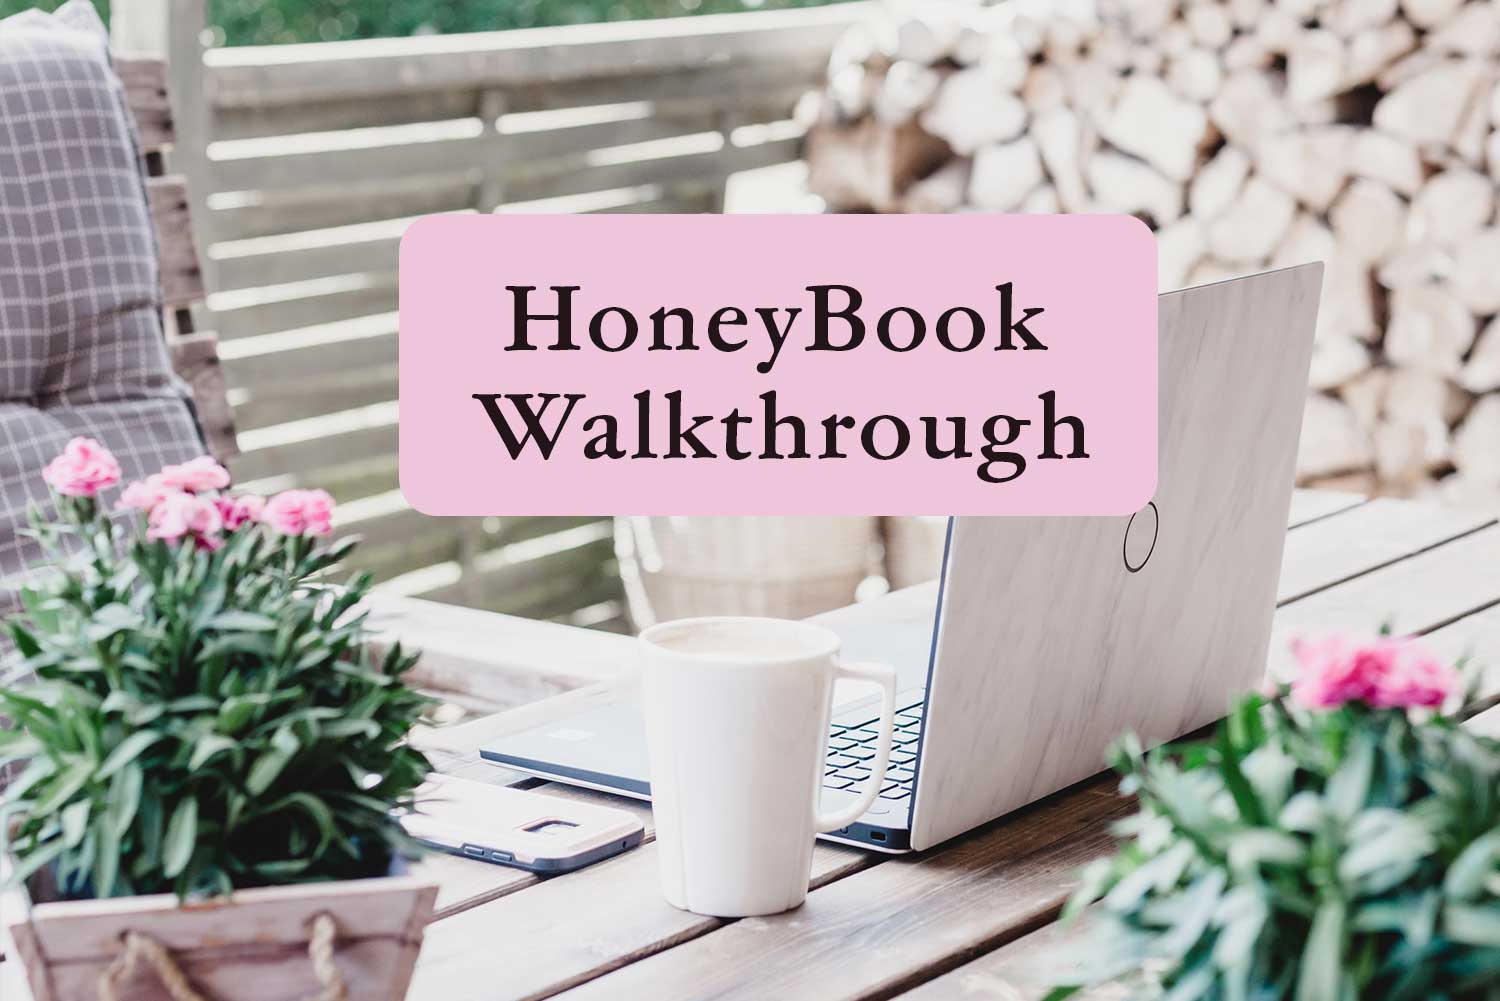 honeybook walkthrough event planning